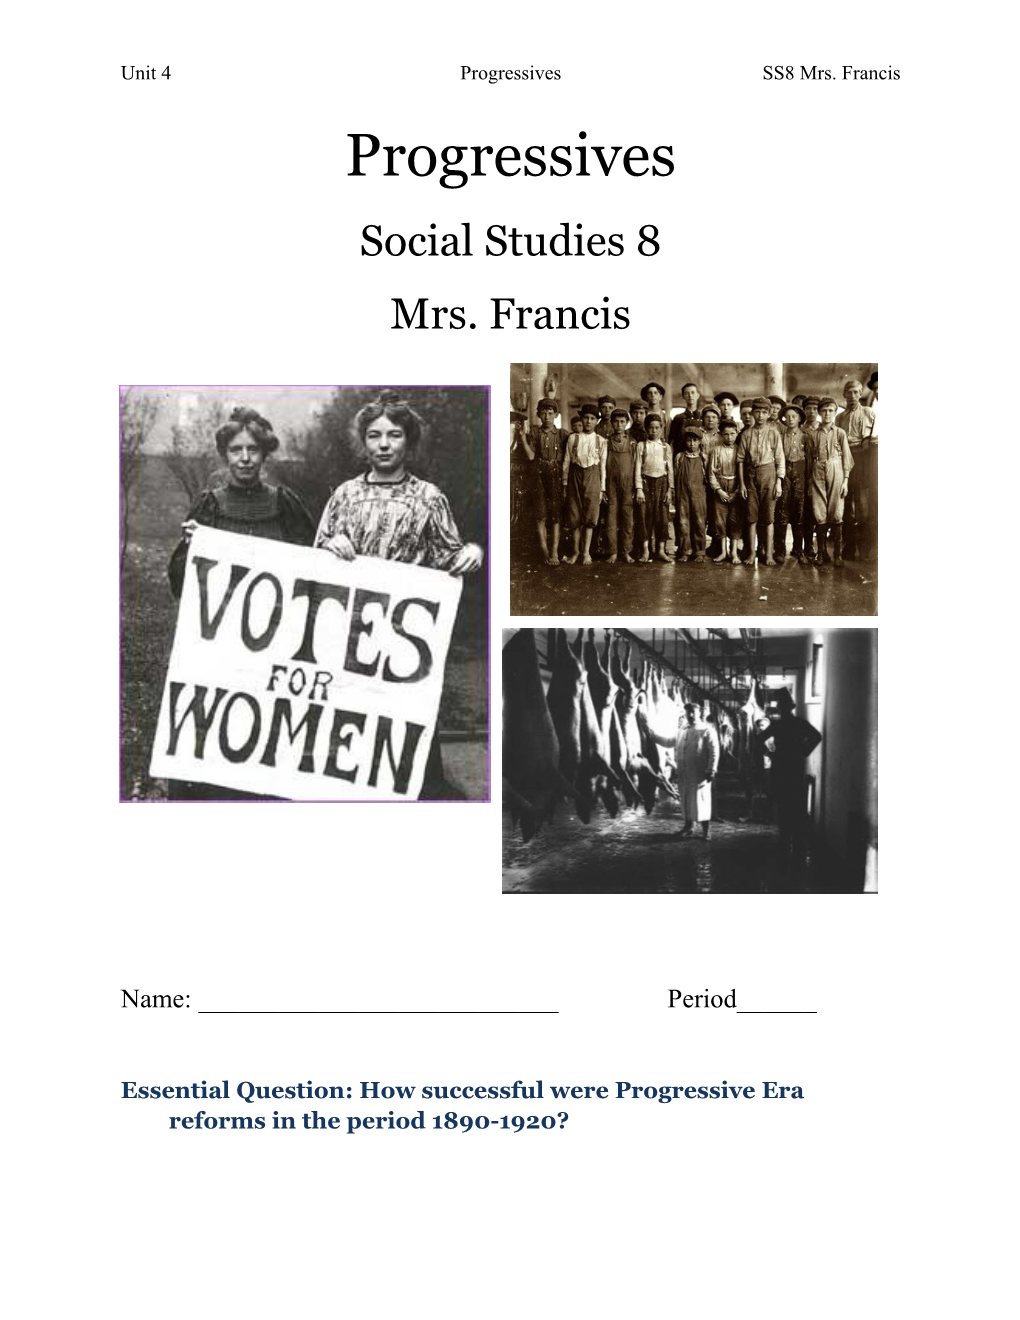 Essential Question: How Successful Were Progressive Era Reforms in the Period 1890-1920?